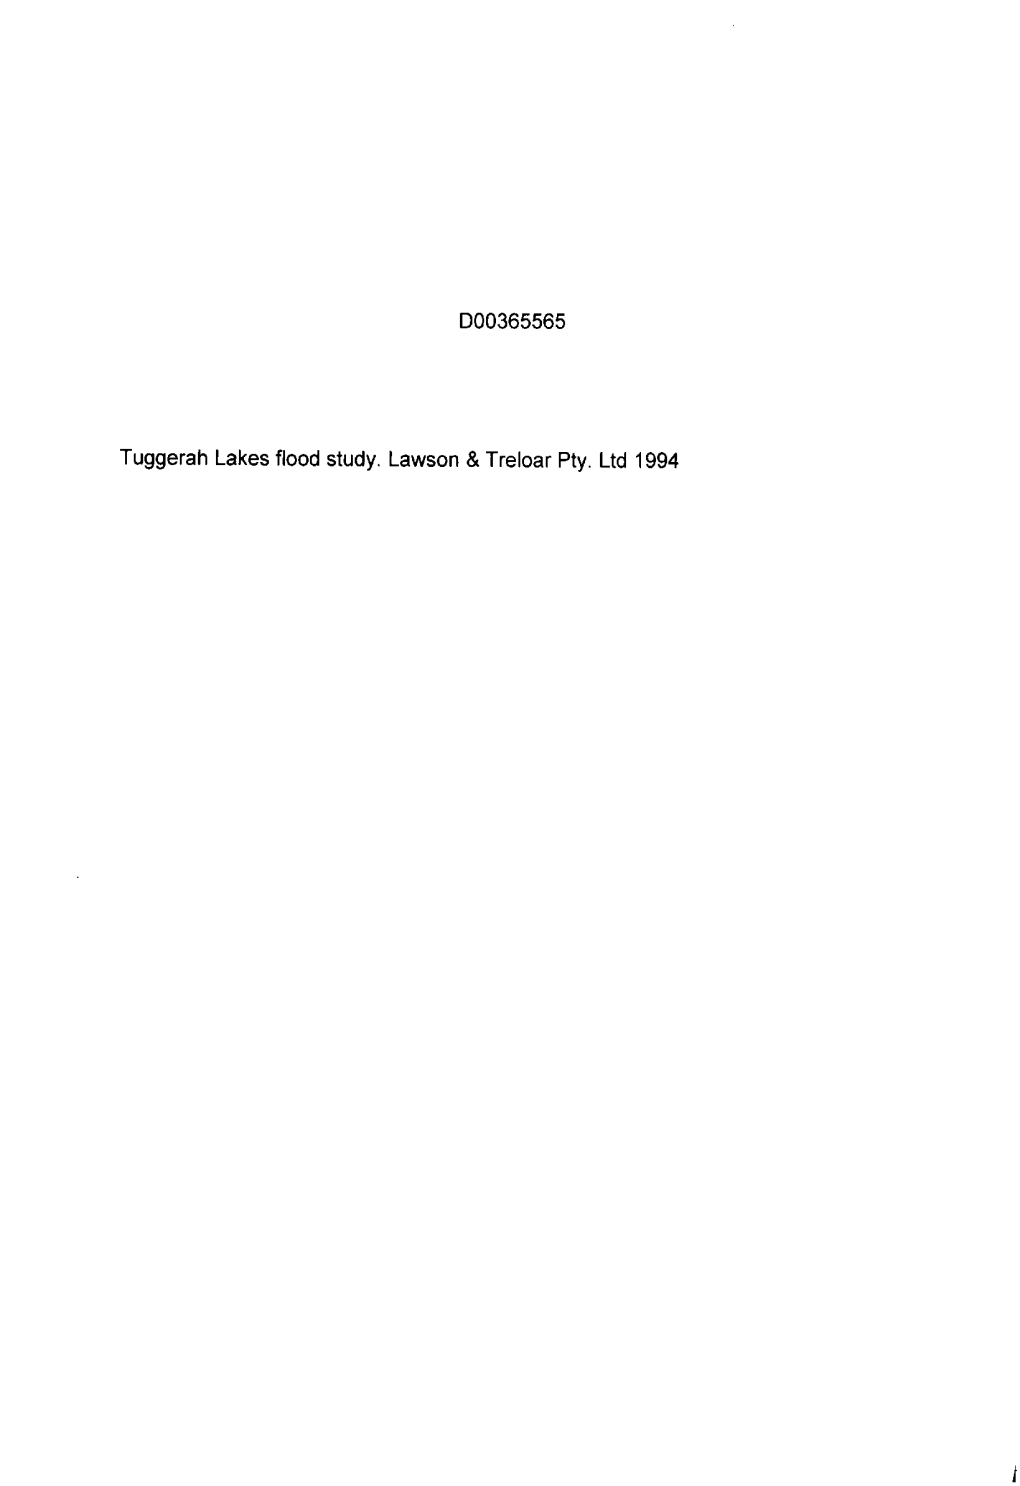 D00365565 Tuggerah Lakes Flood Study. Lawson & Treloar Pty. Ltd 1994